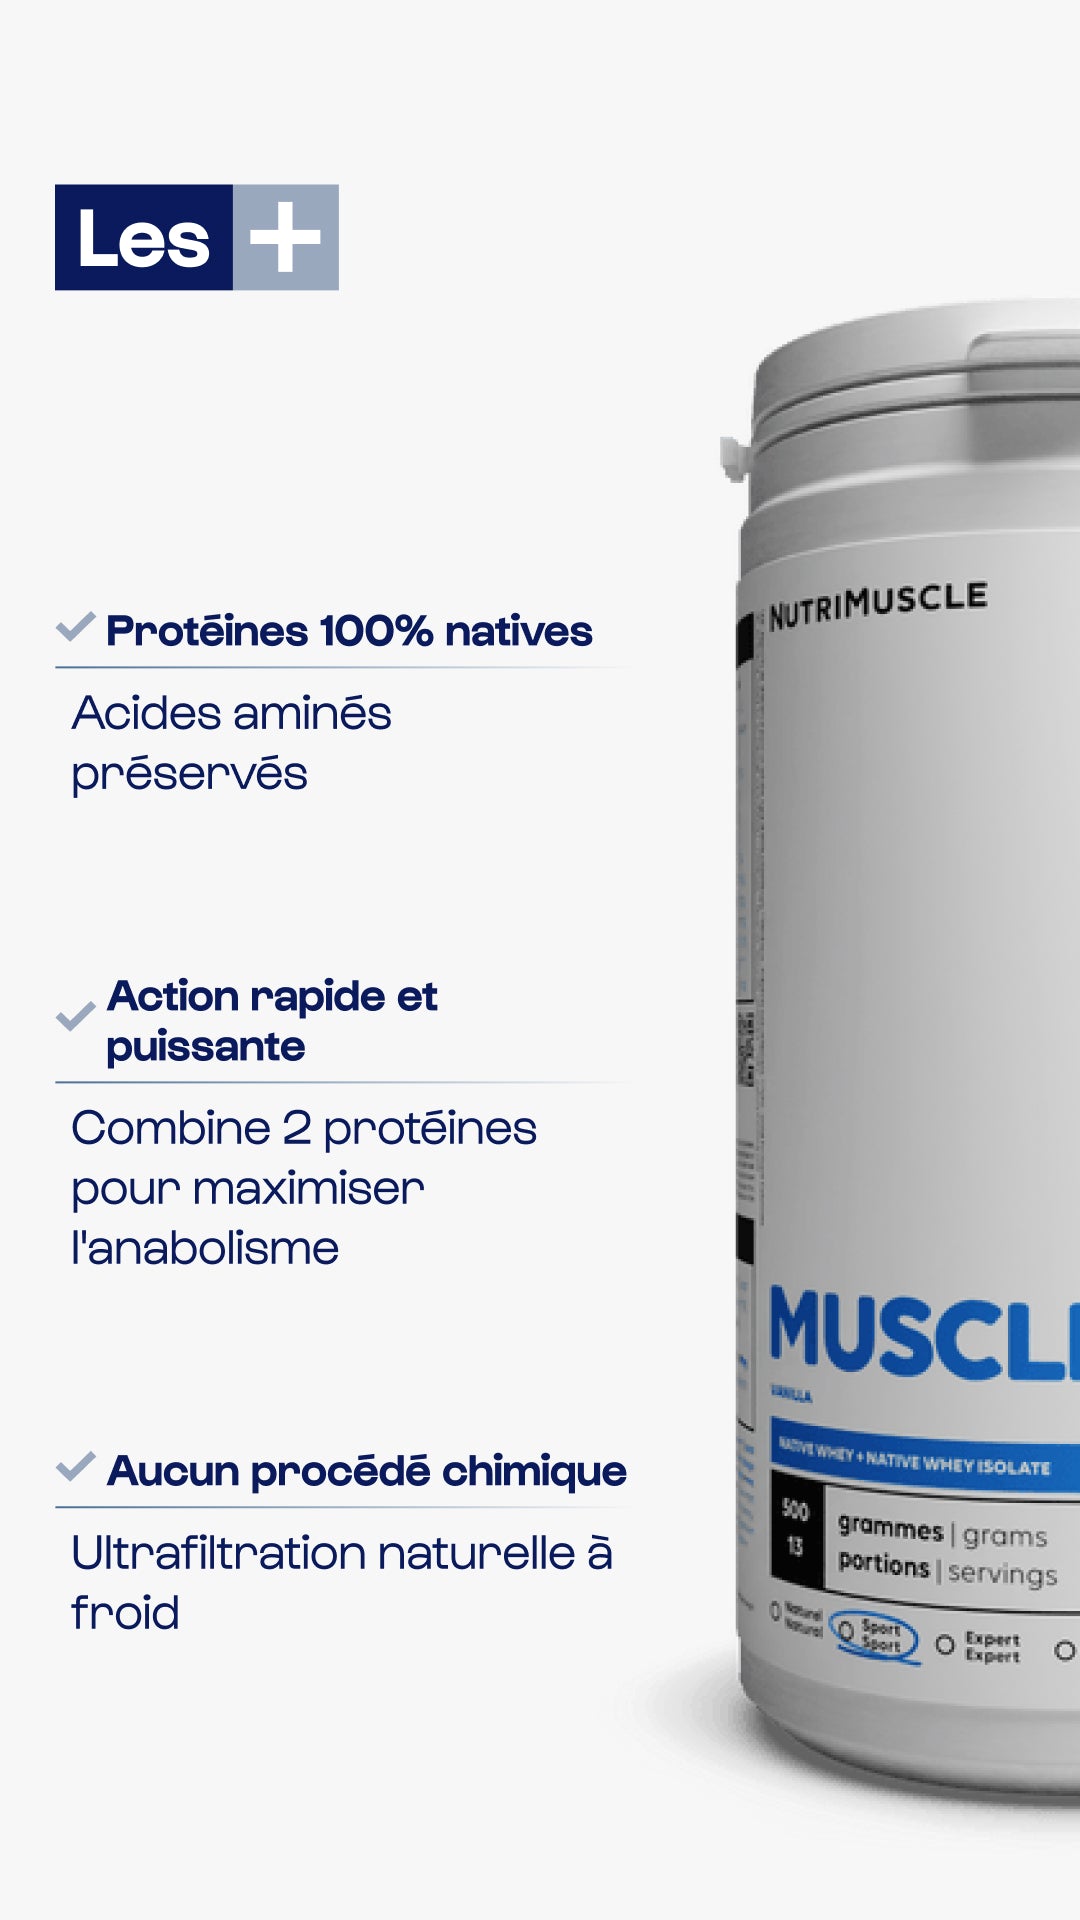 Musclewhey - mezclar proteína